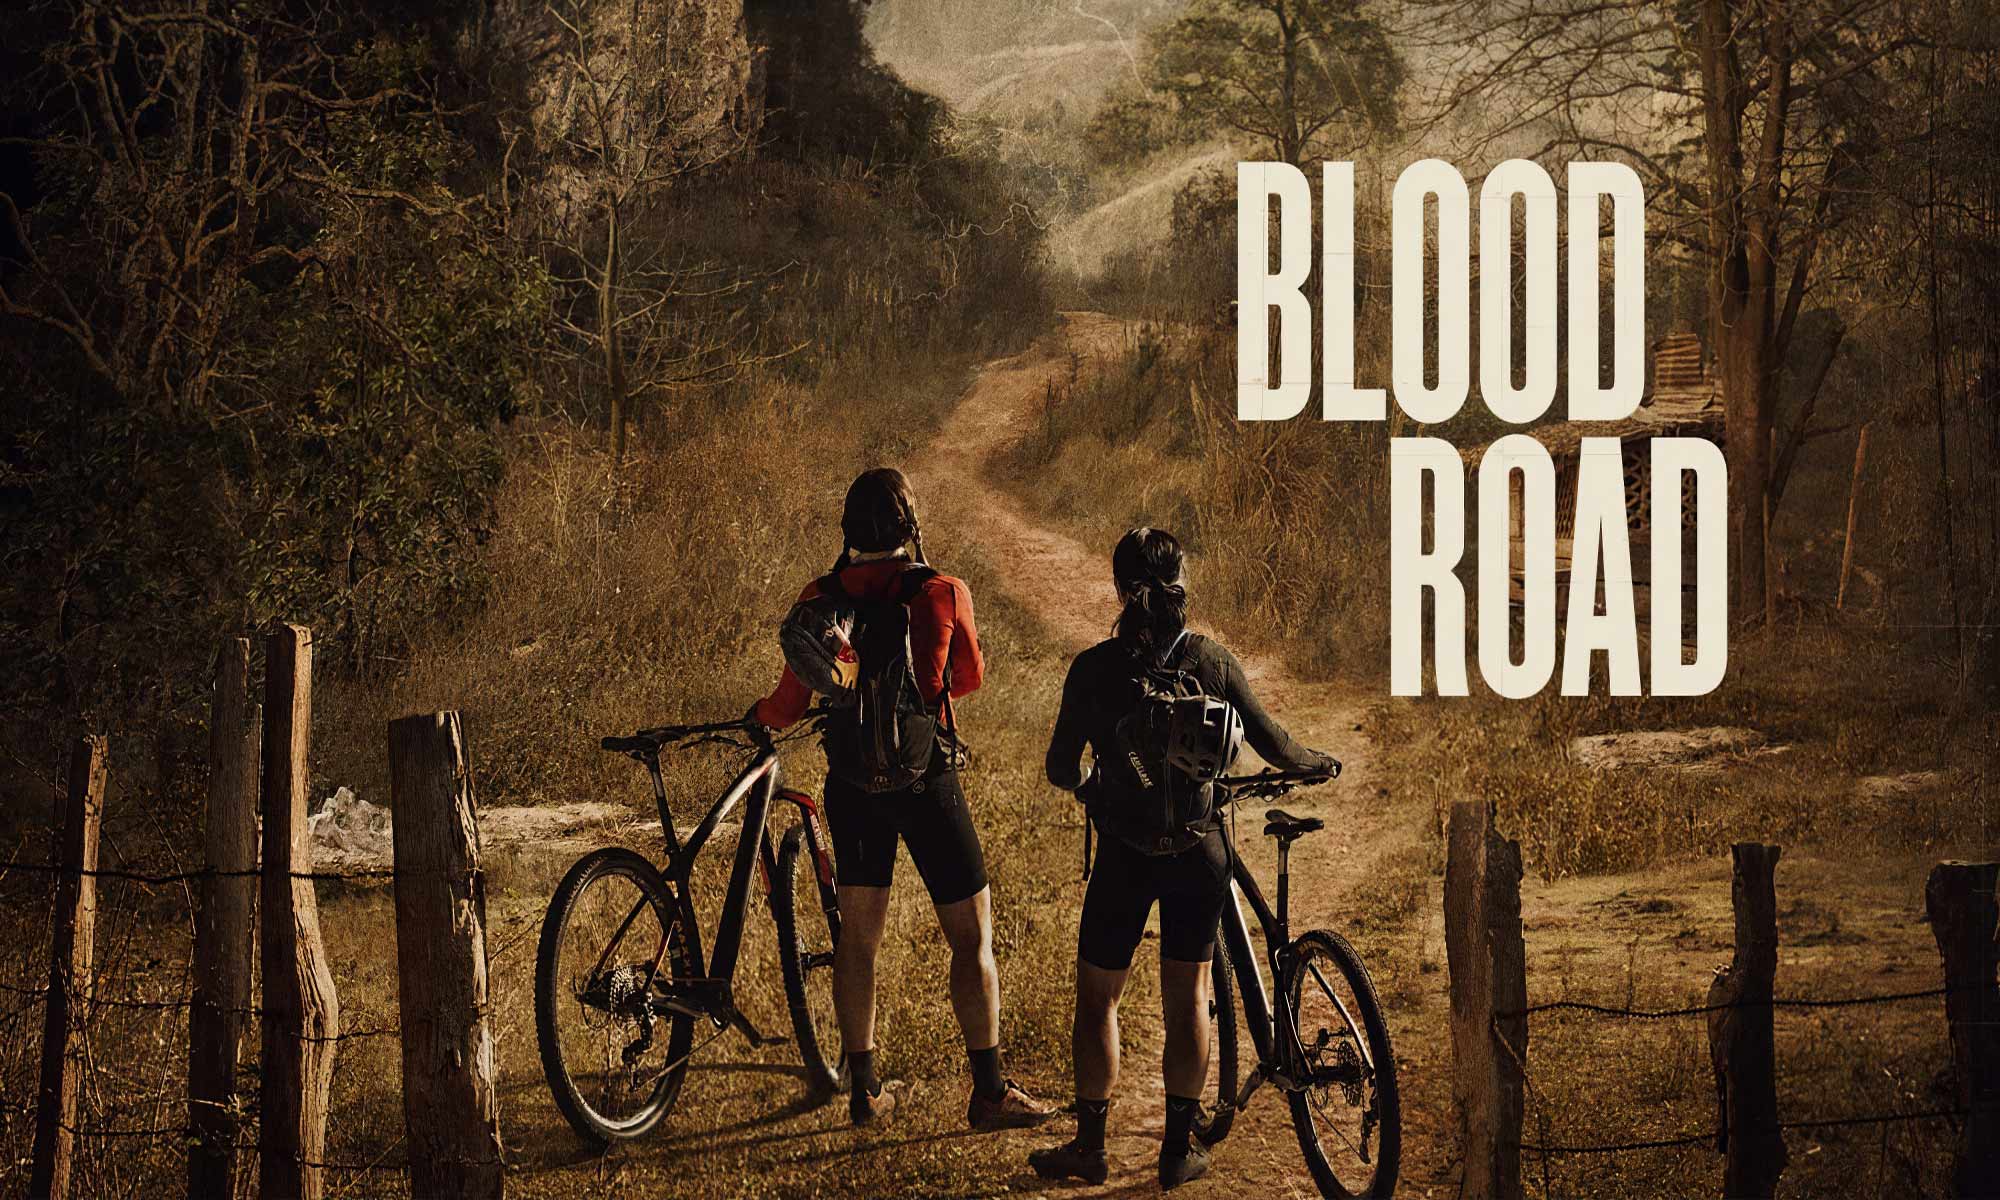 Blood road